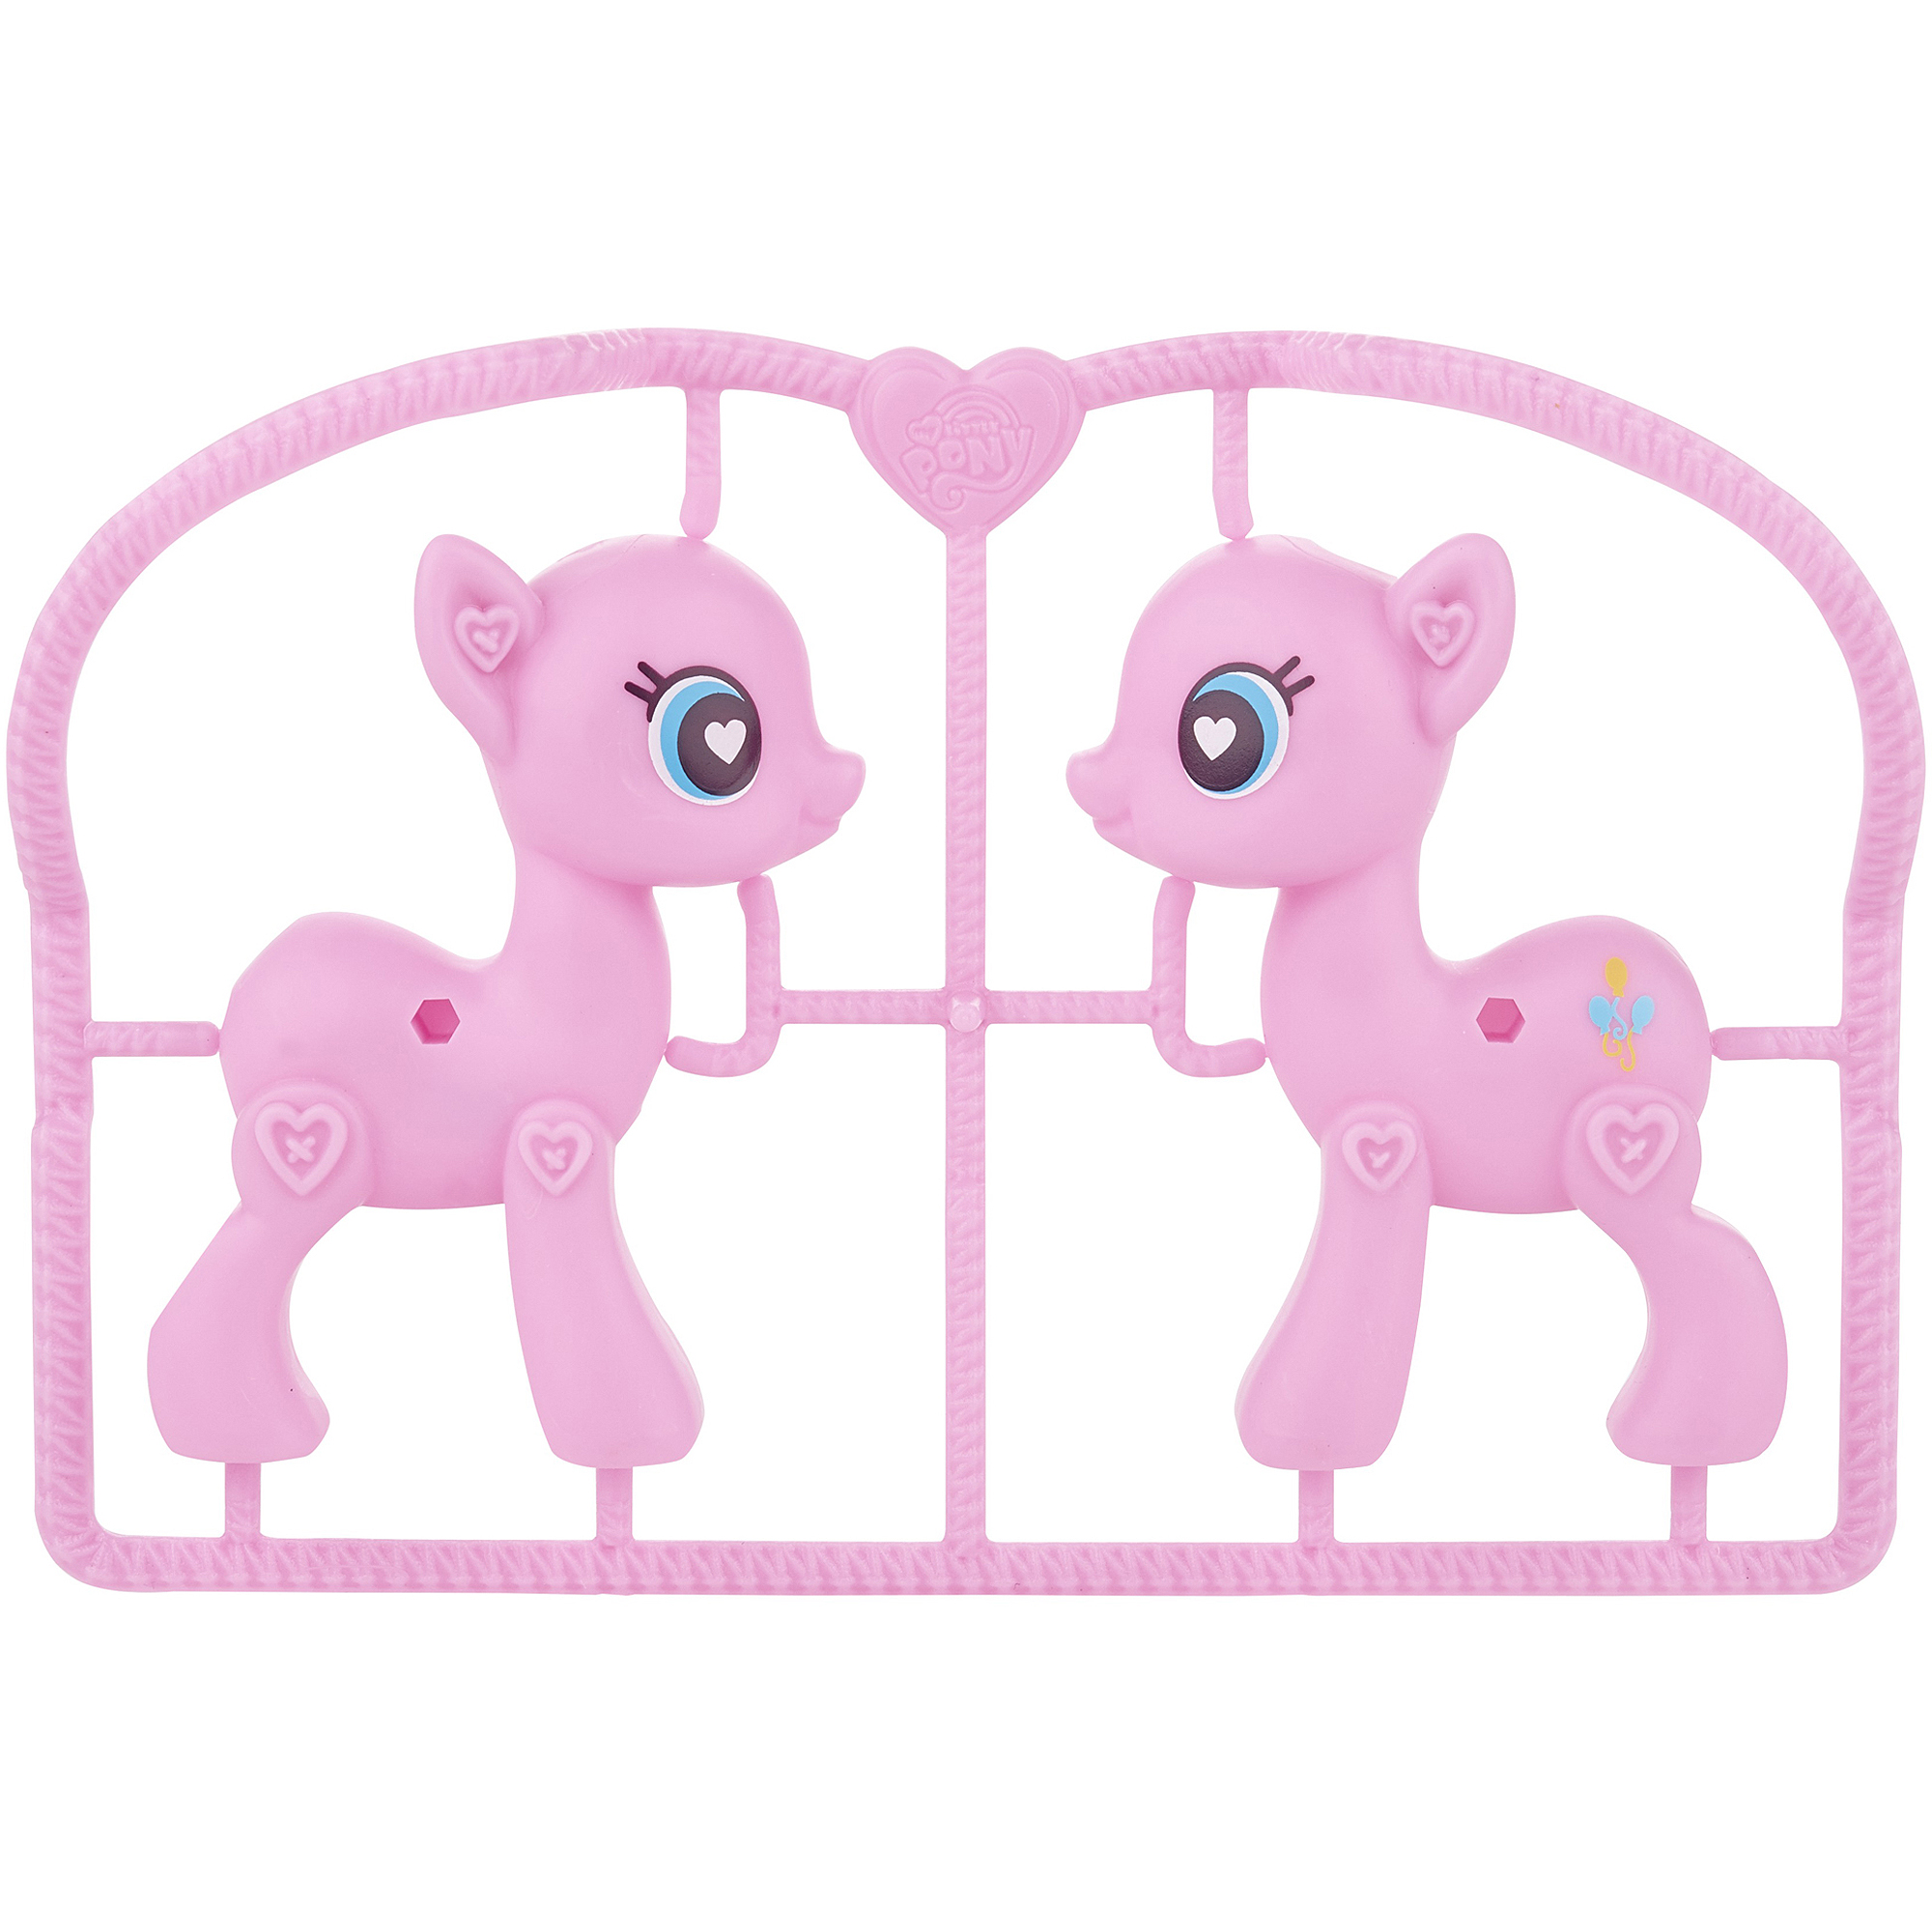 My Little Pony Pop Pinkie Pie Starter Kit, Doll accessories - image 3 of 11